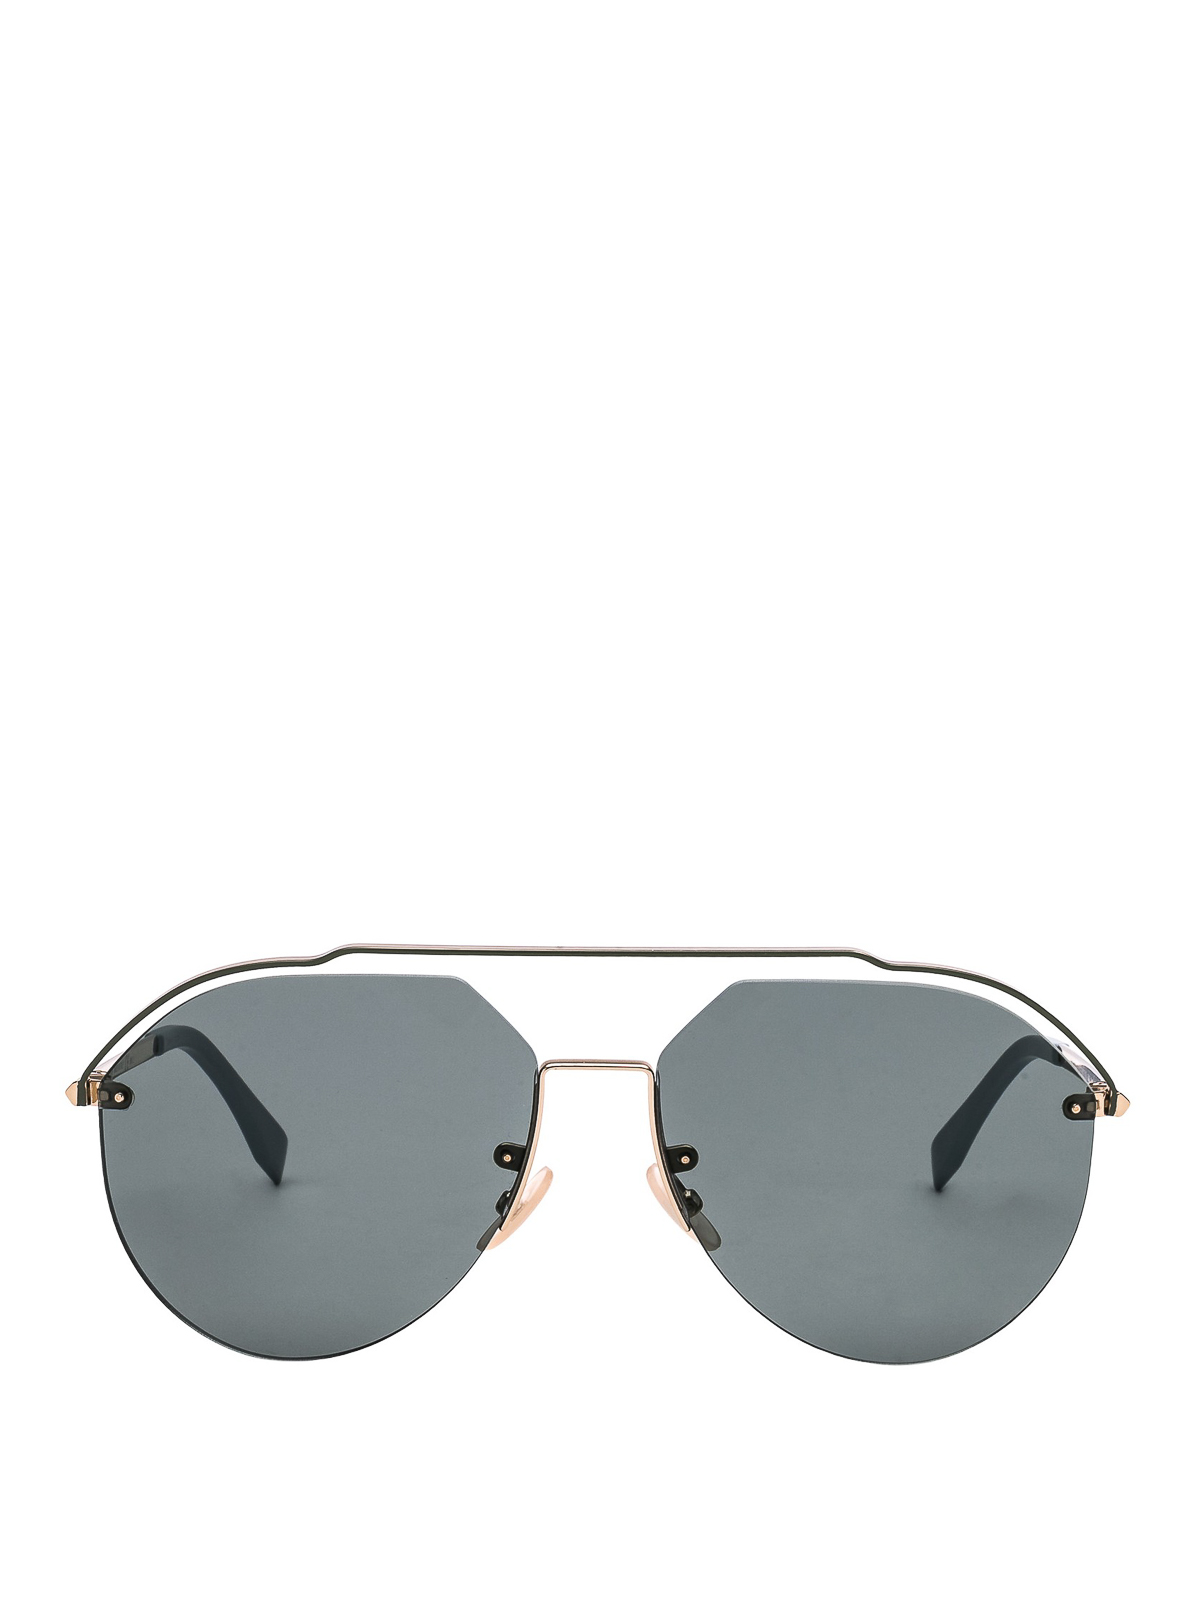 Fendi - Fendi Fancy aviator sunglasses 